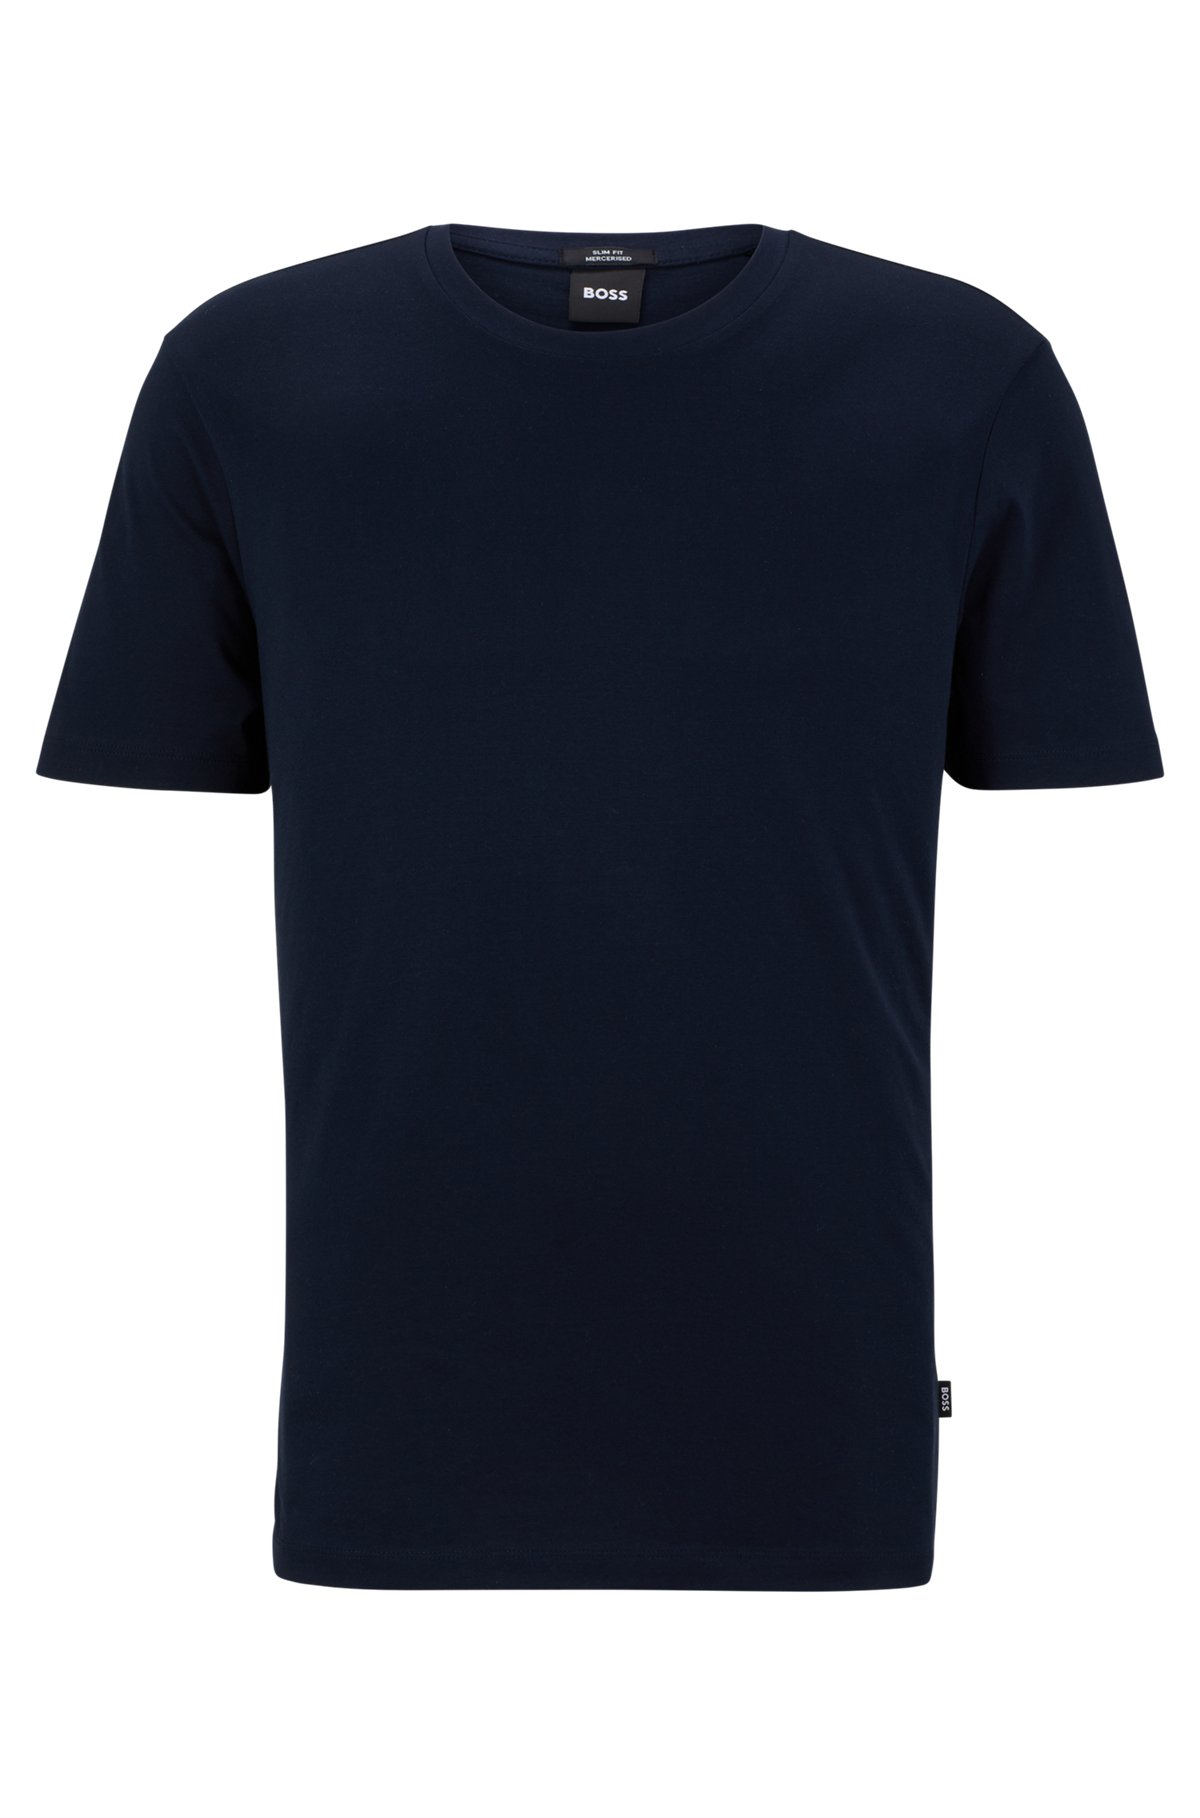 Slim-fit short-sleeved T-shirt in mercerized cotton, Dark Blue